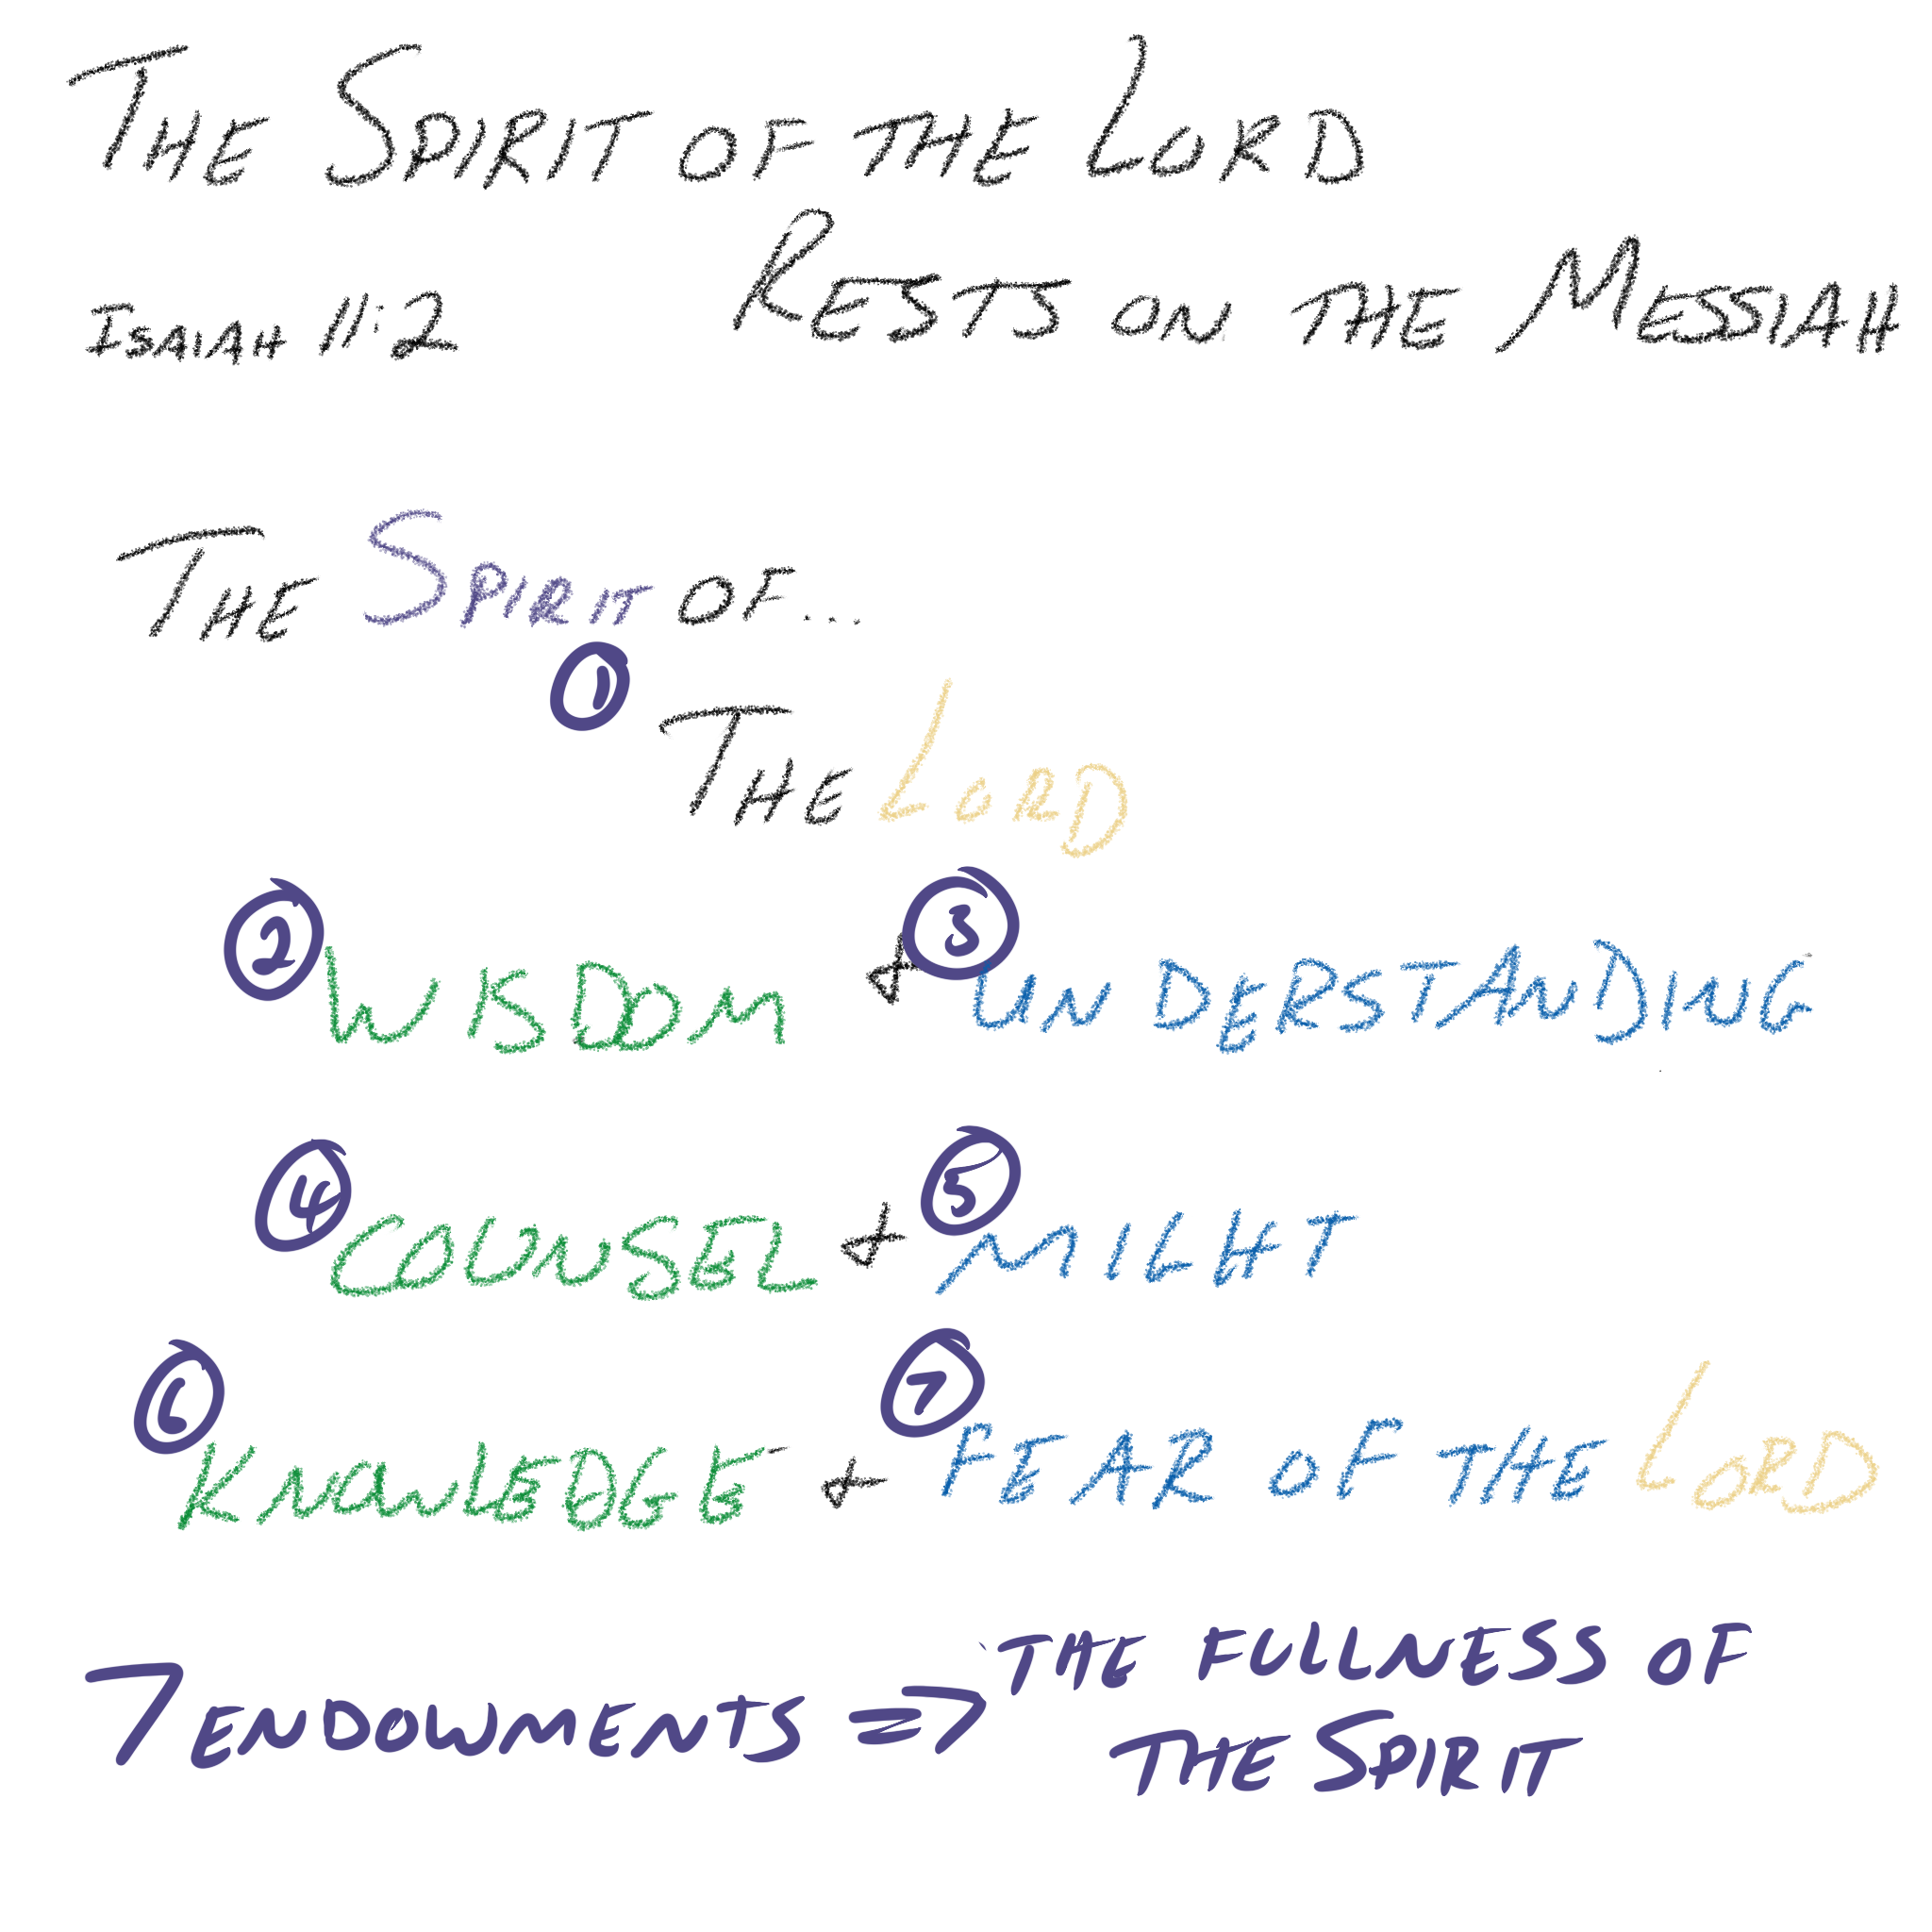 Isaiah 11:2 - Endowments of the Spirit